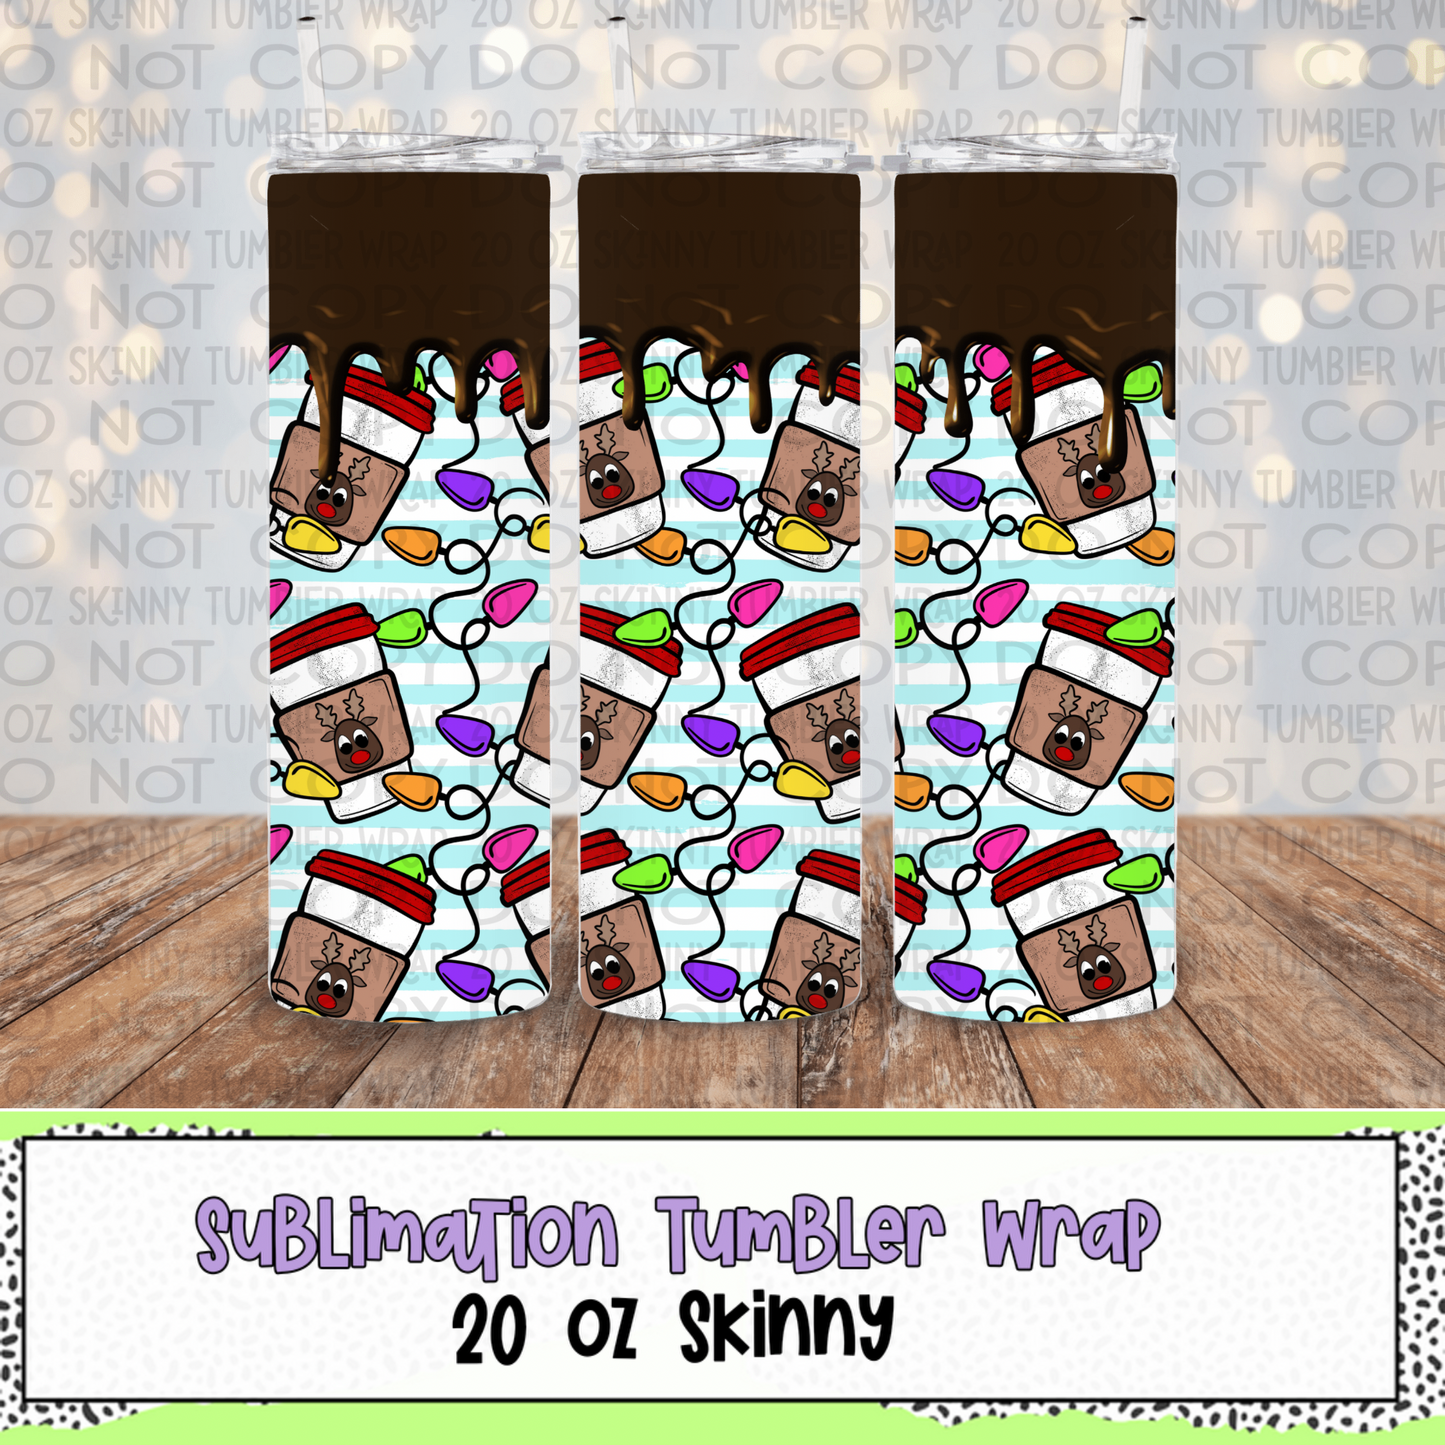 Coffee And Christmas Lights Chocolate Drip 20 Oz Skinny Tumbler Wrap - Sublimation Transfer - RTS